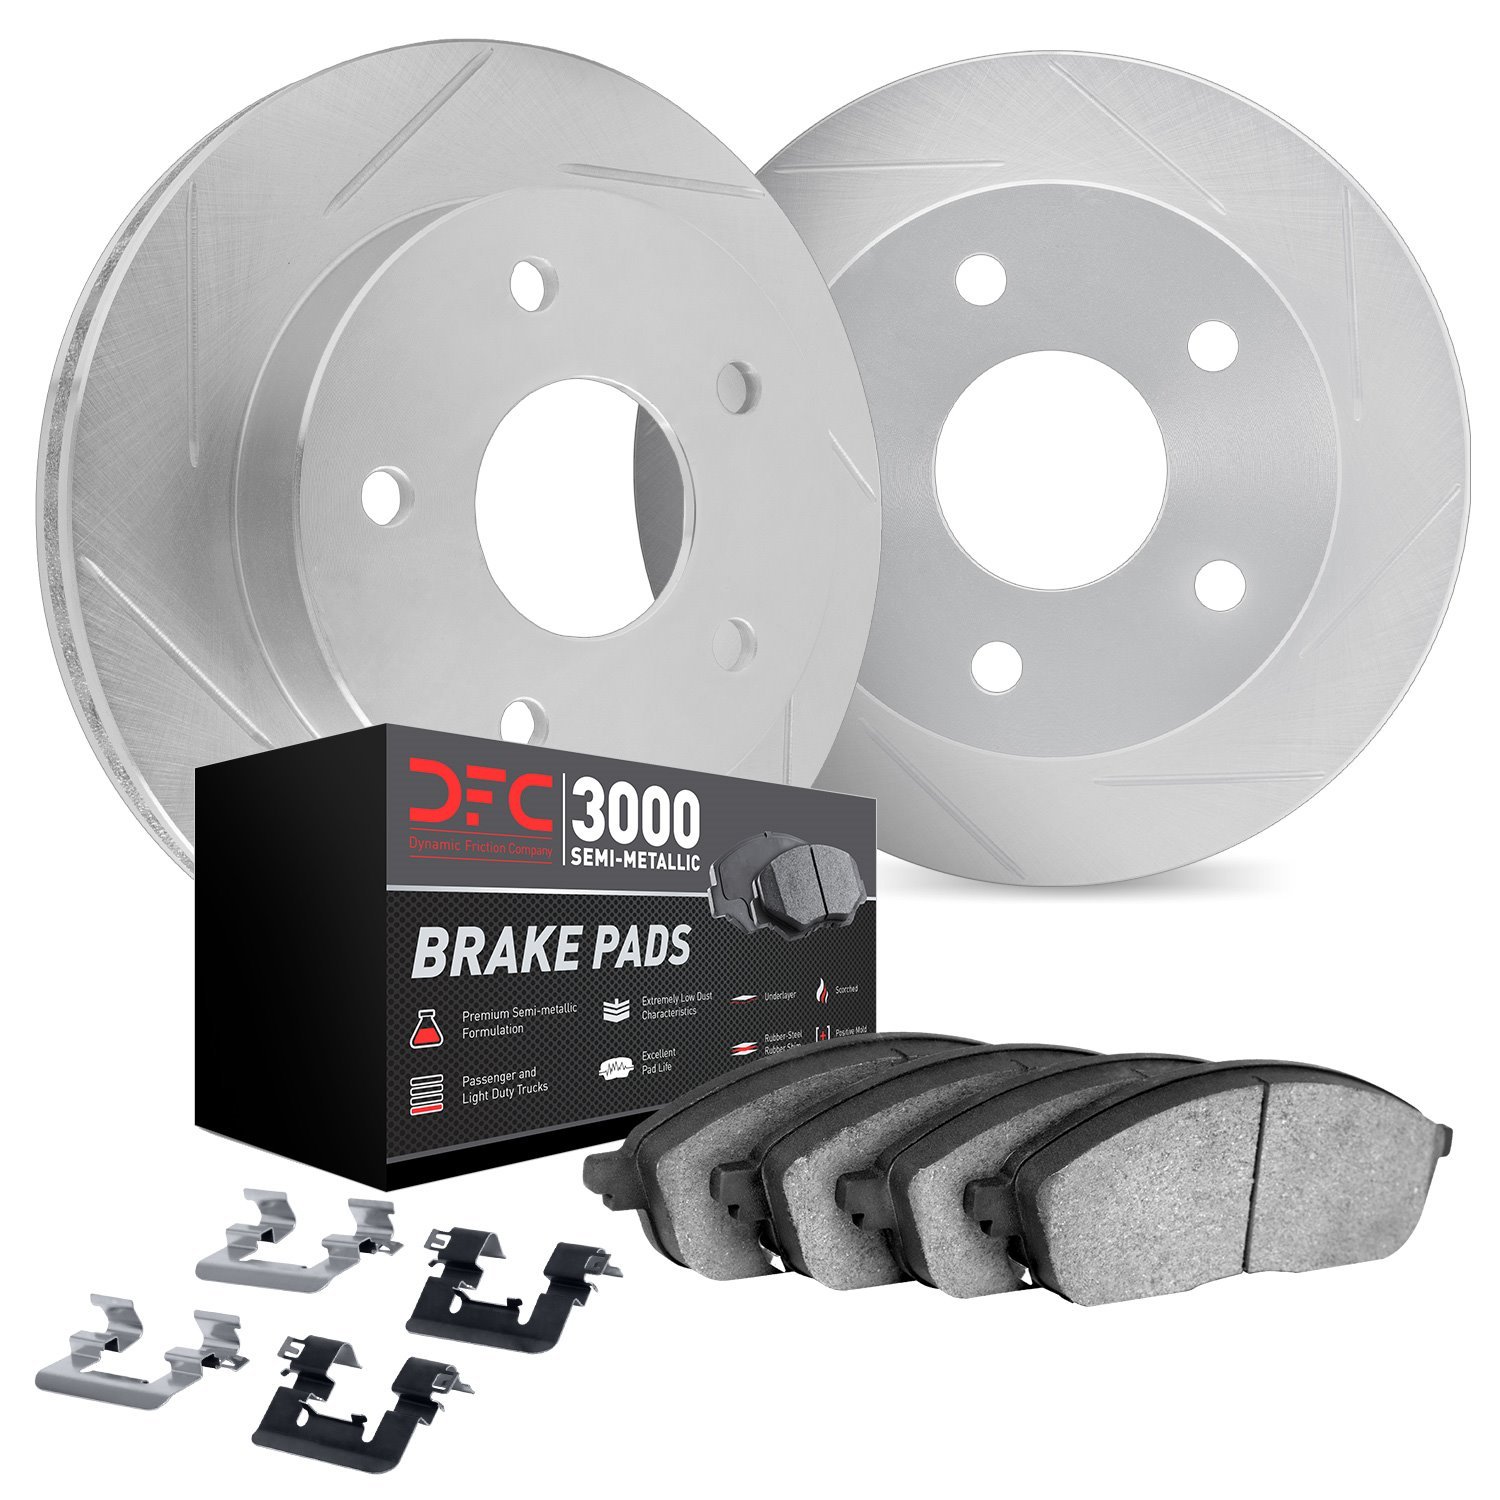 5112-42025 Slotted Brake Rotors with 3000-Series Semi-Metallic Brake Pads Kit & Hardware [Silver], Fits Select Mopar, Position: